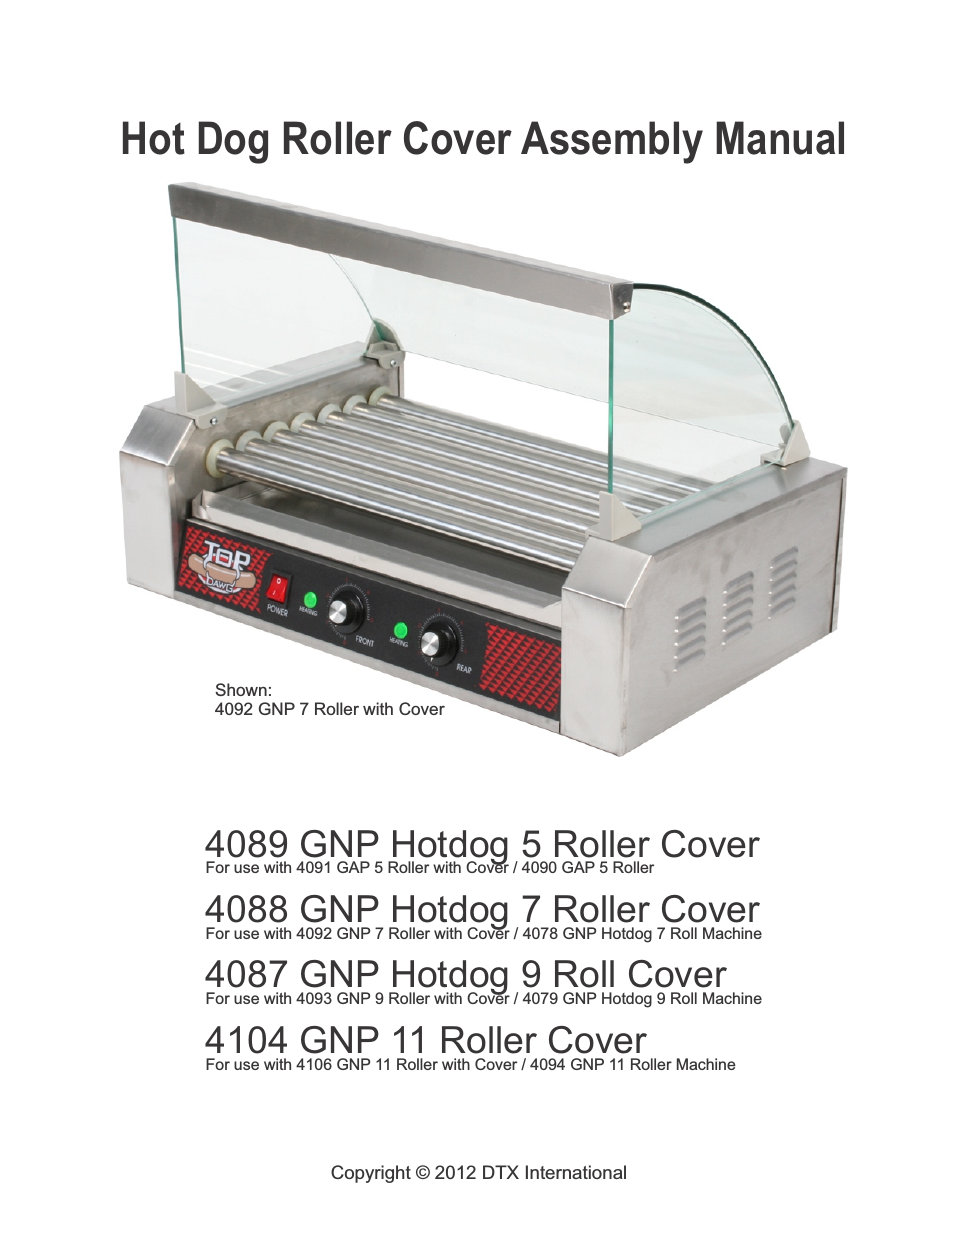 4087 GNP Hotdog 9 Roller Cover